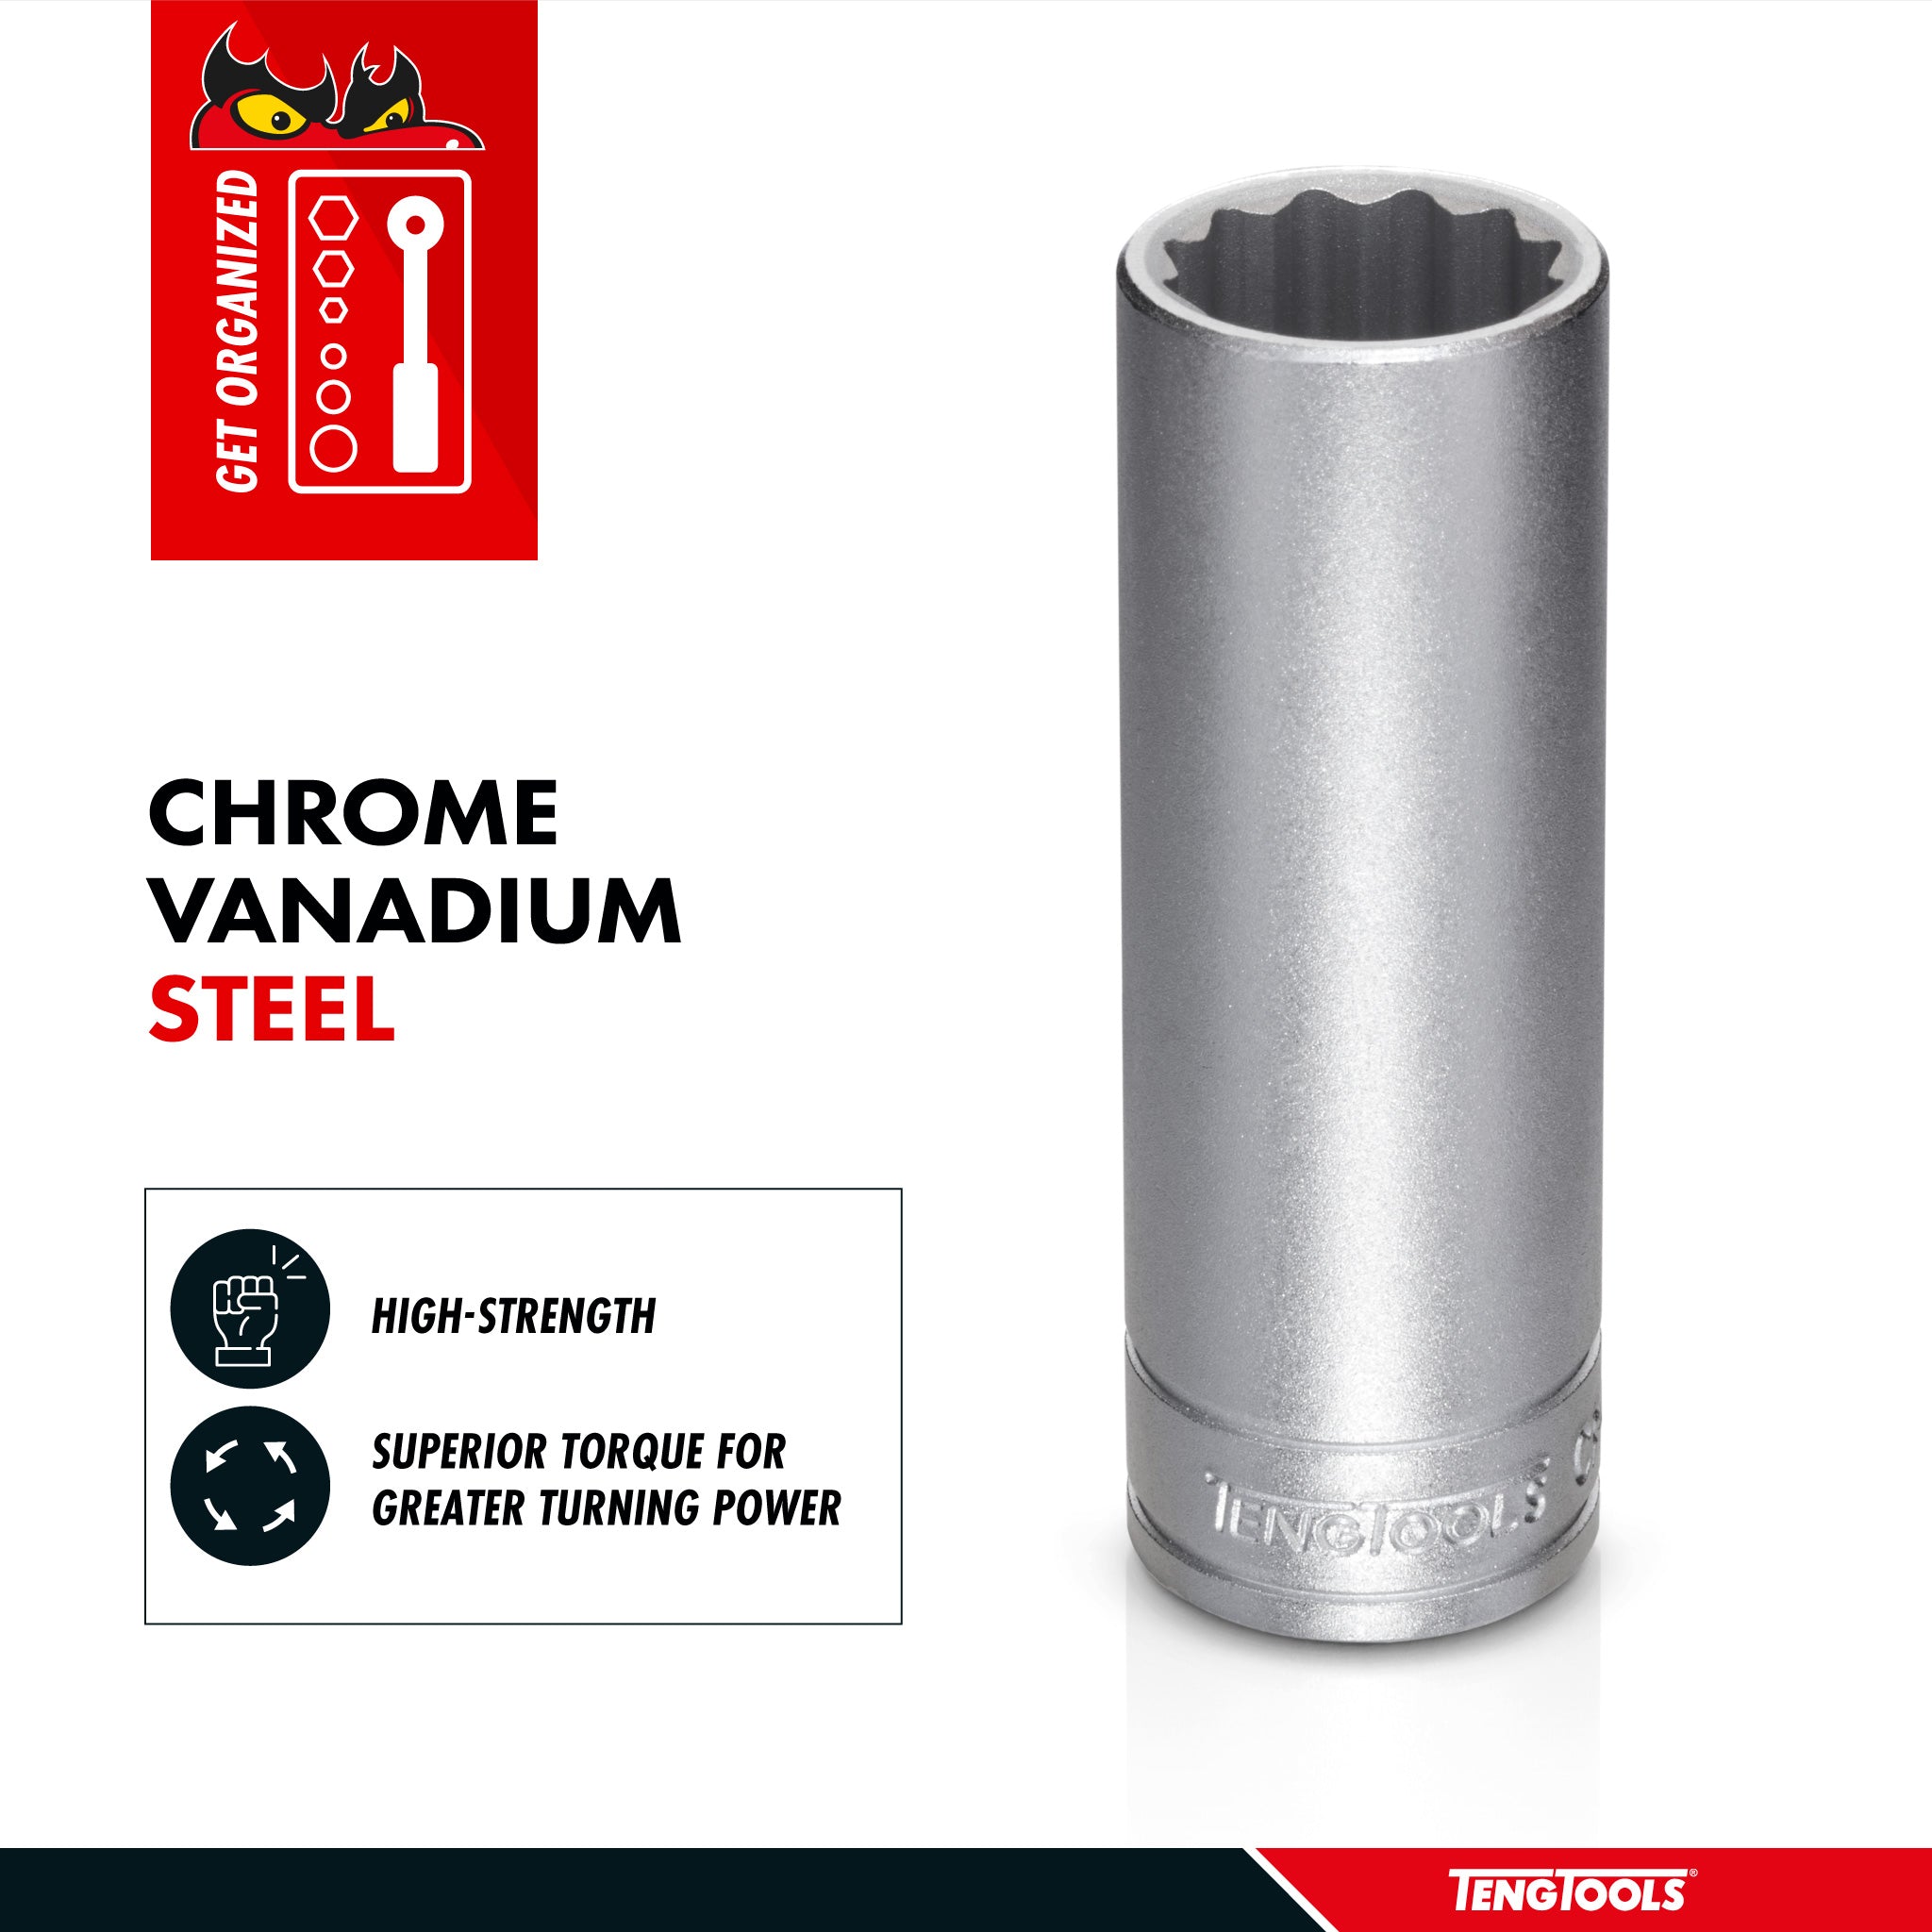 Teng Tools 1/2 Inch Drive 12 Point Metric Deep Chrome Vanadium Sockets - 14mm